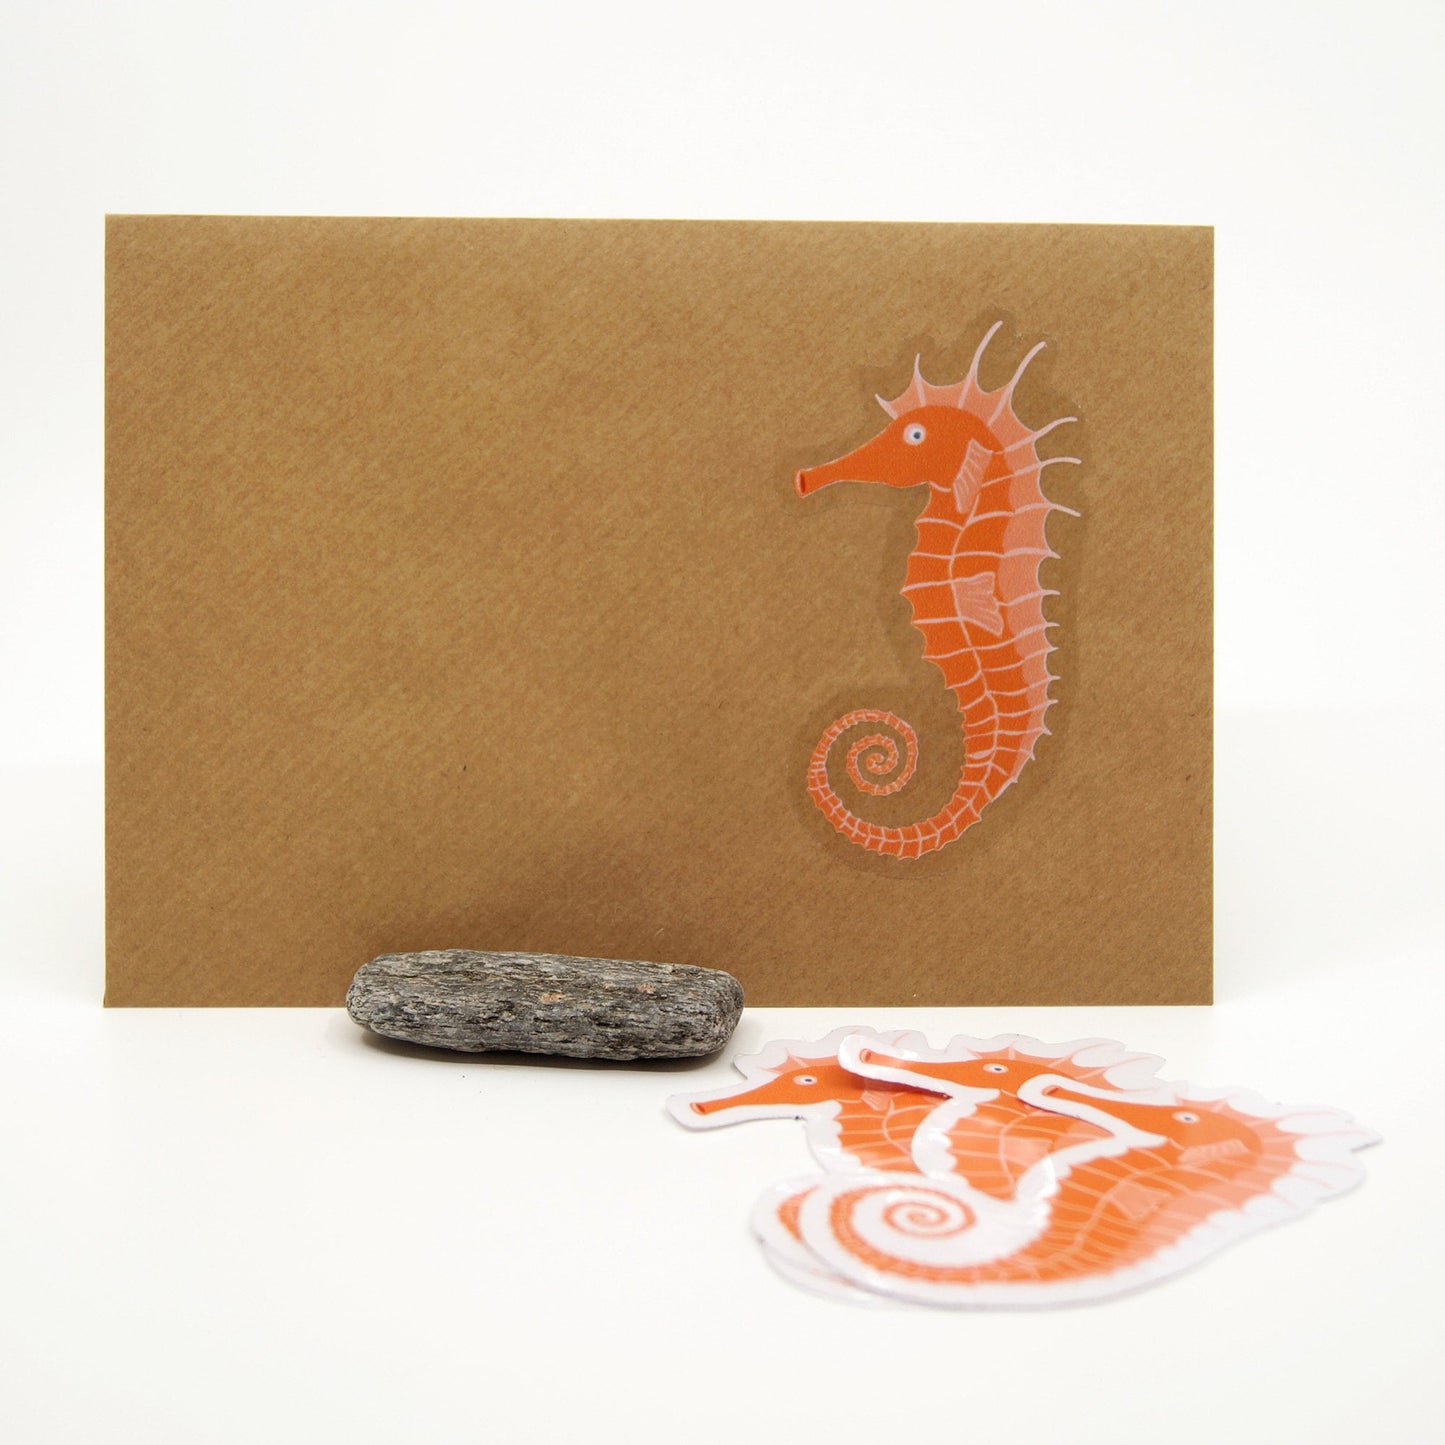 Sticker 3 pieces seahorse, transparent sticker, 8x5cm